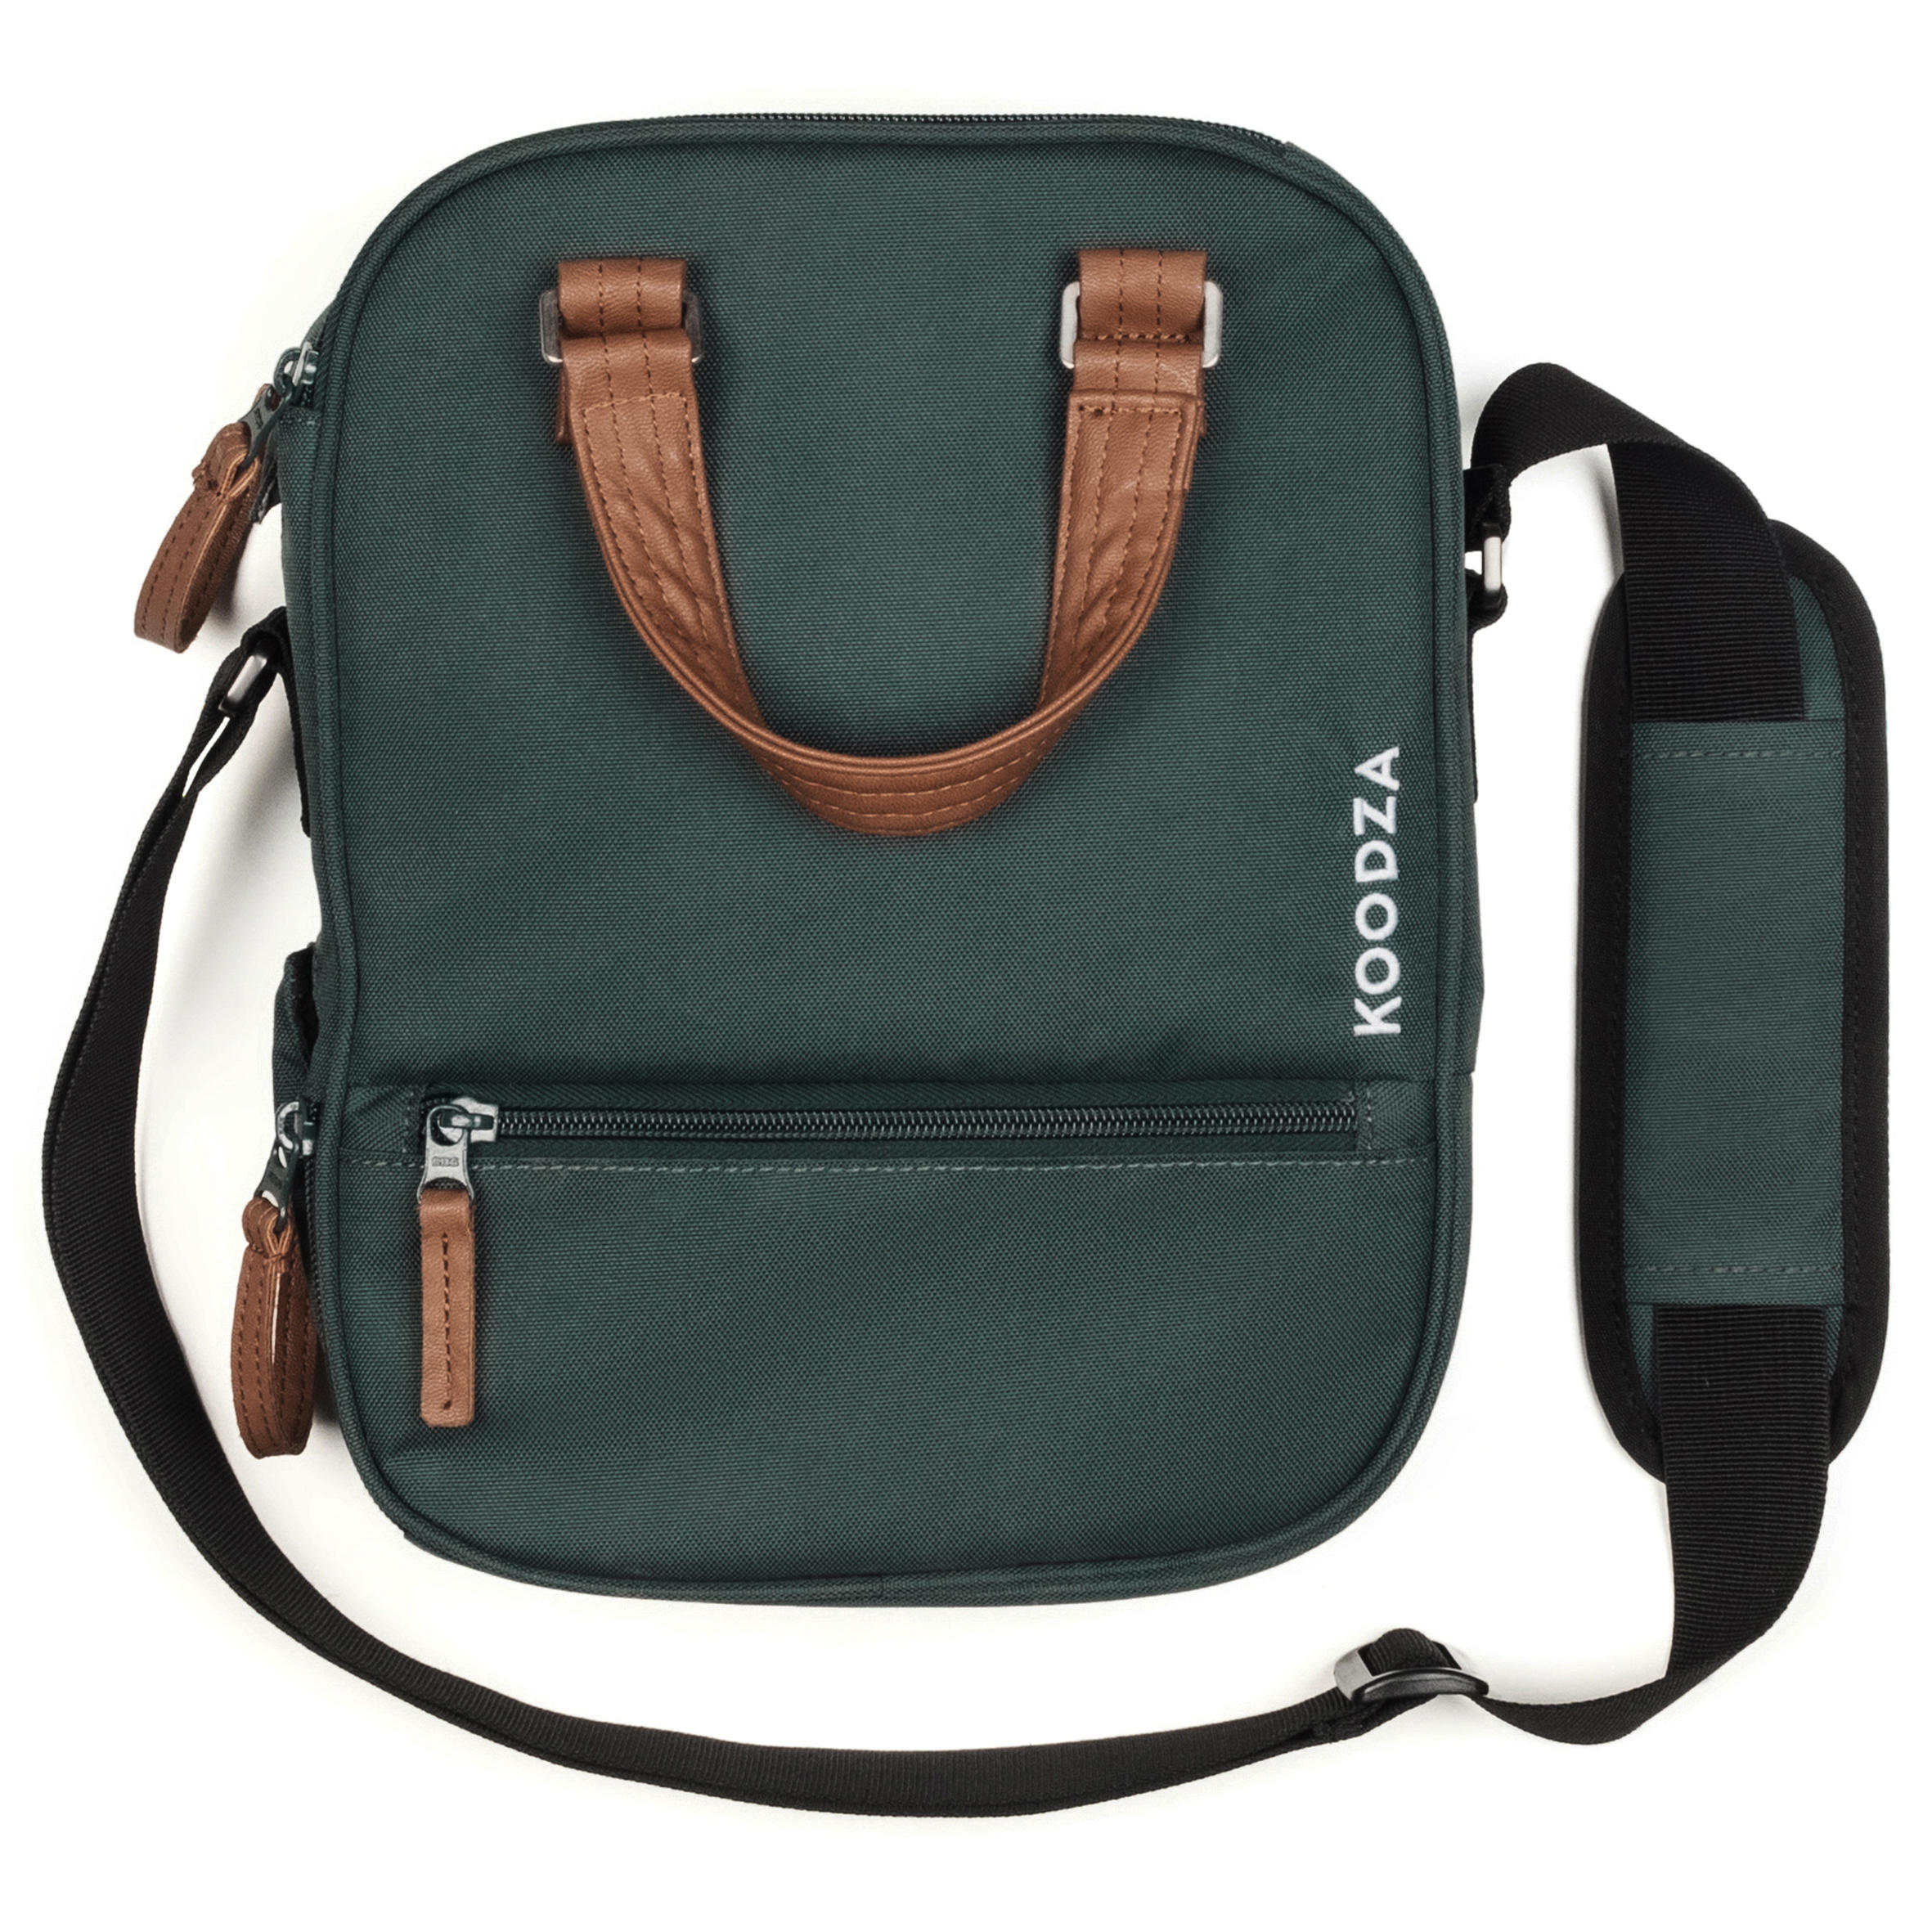 KOODZA Semi-Rigid XL Bag for 3 Petanque Boules and Accessories